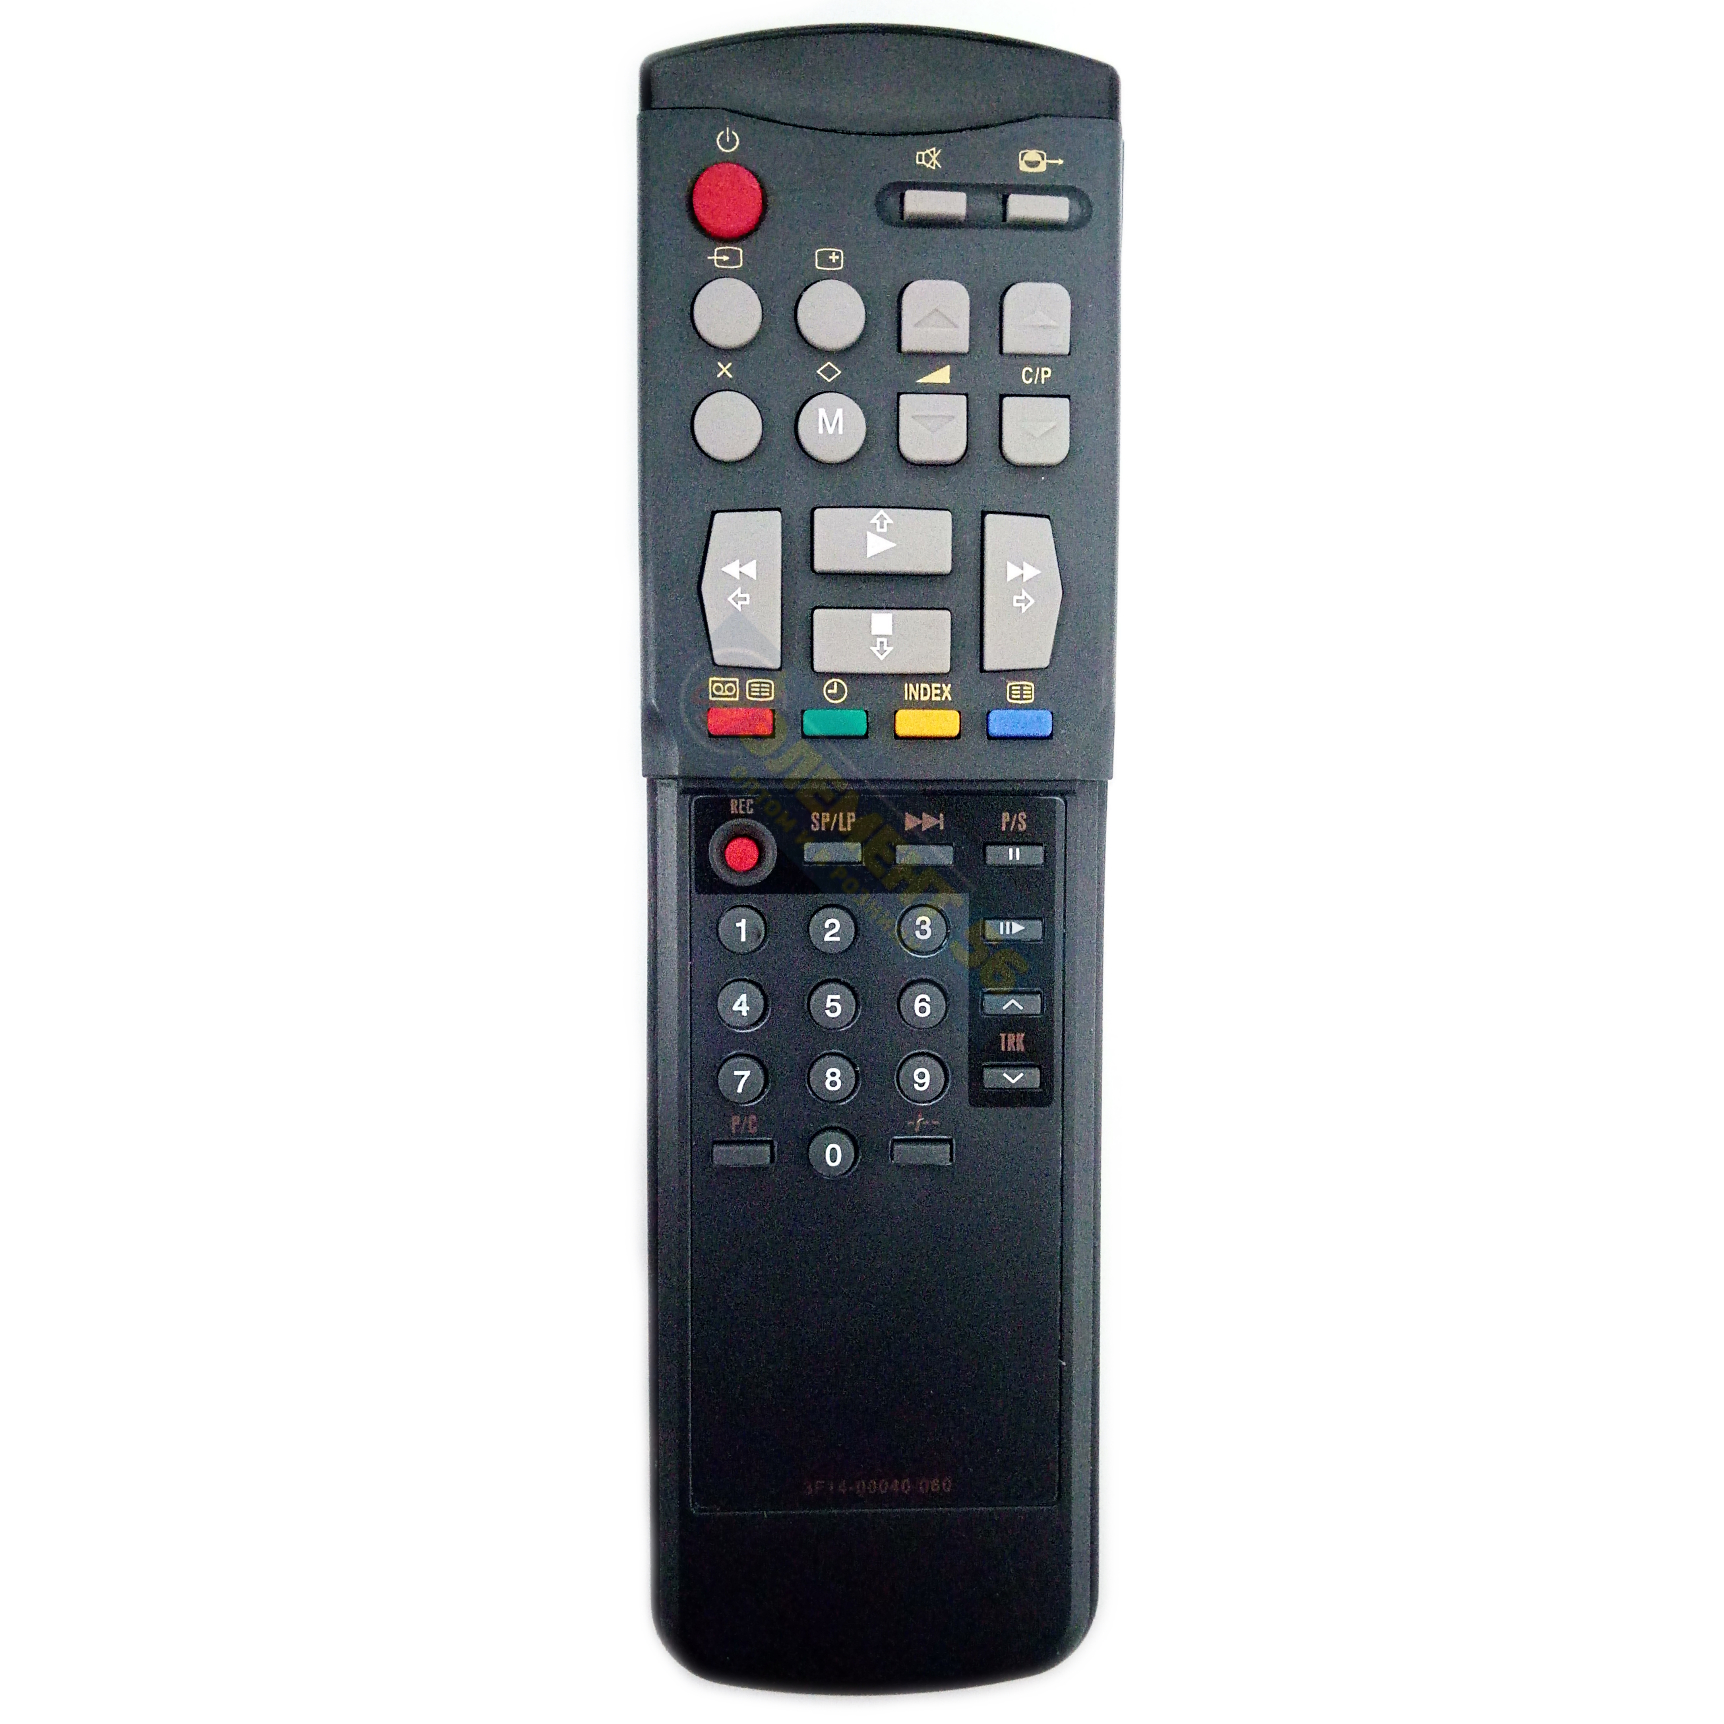 Пульт для телевизора SAMSUNG 3F14-00040-060/061 для TV+VCR тех пак